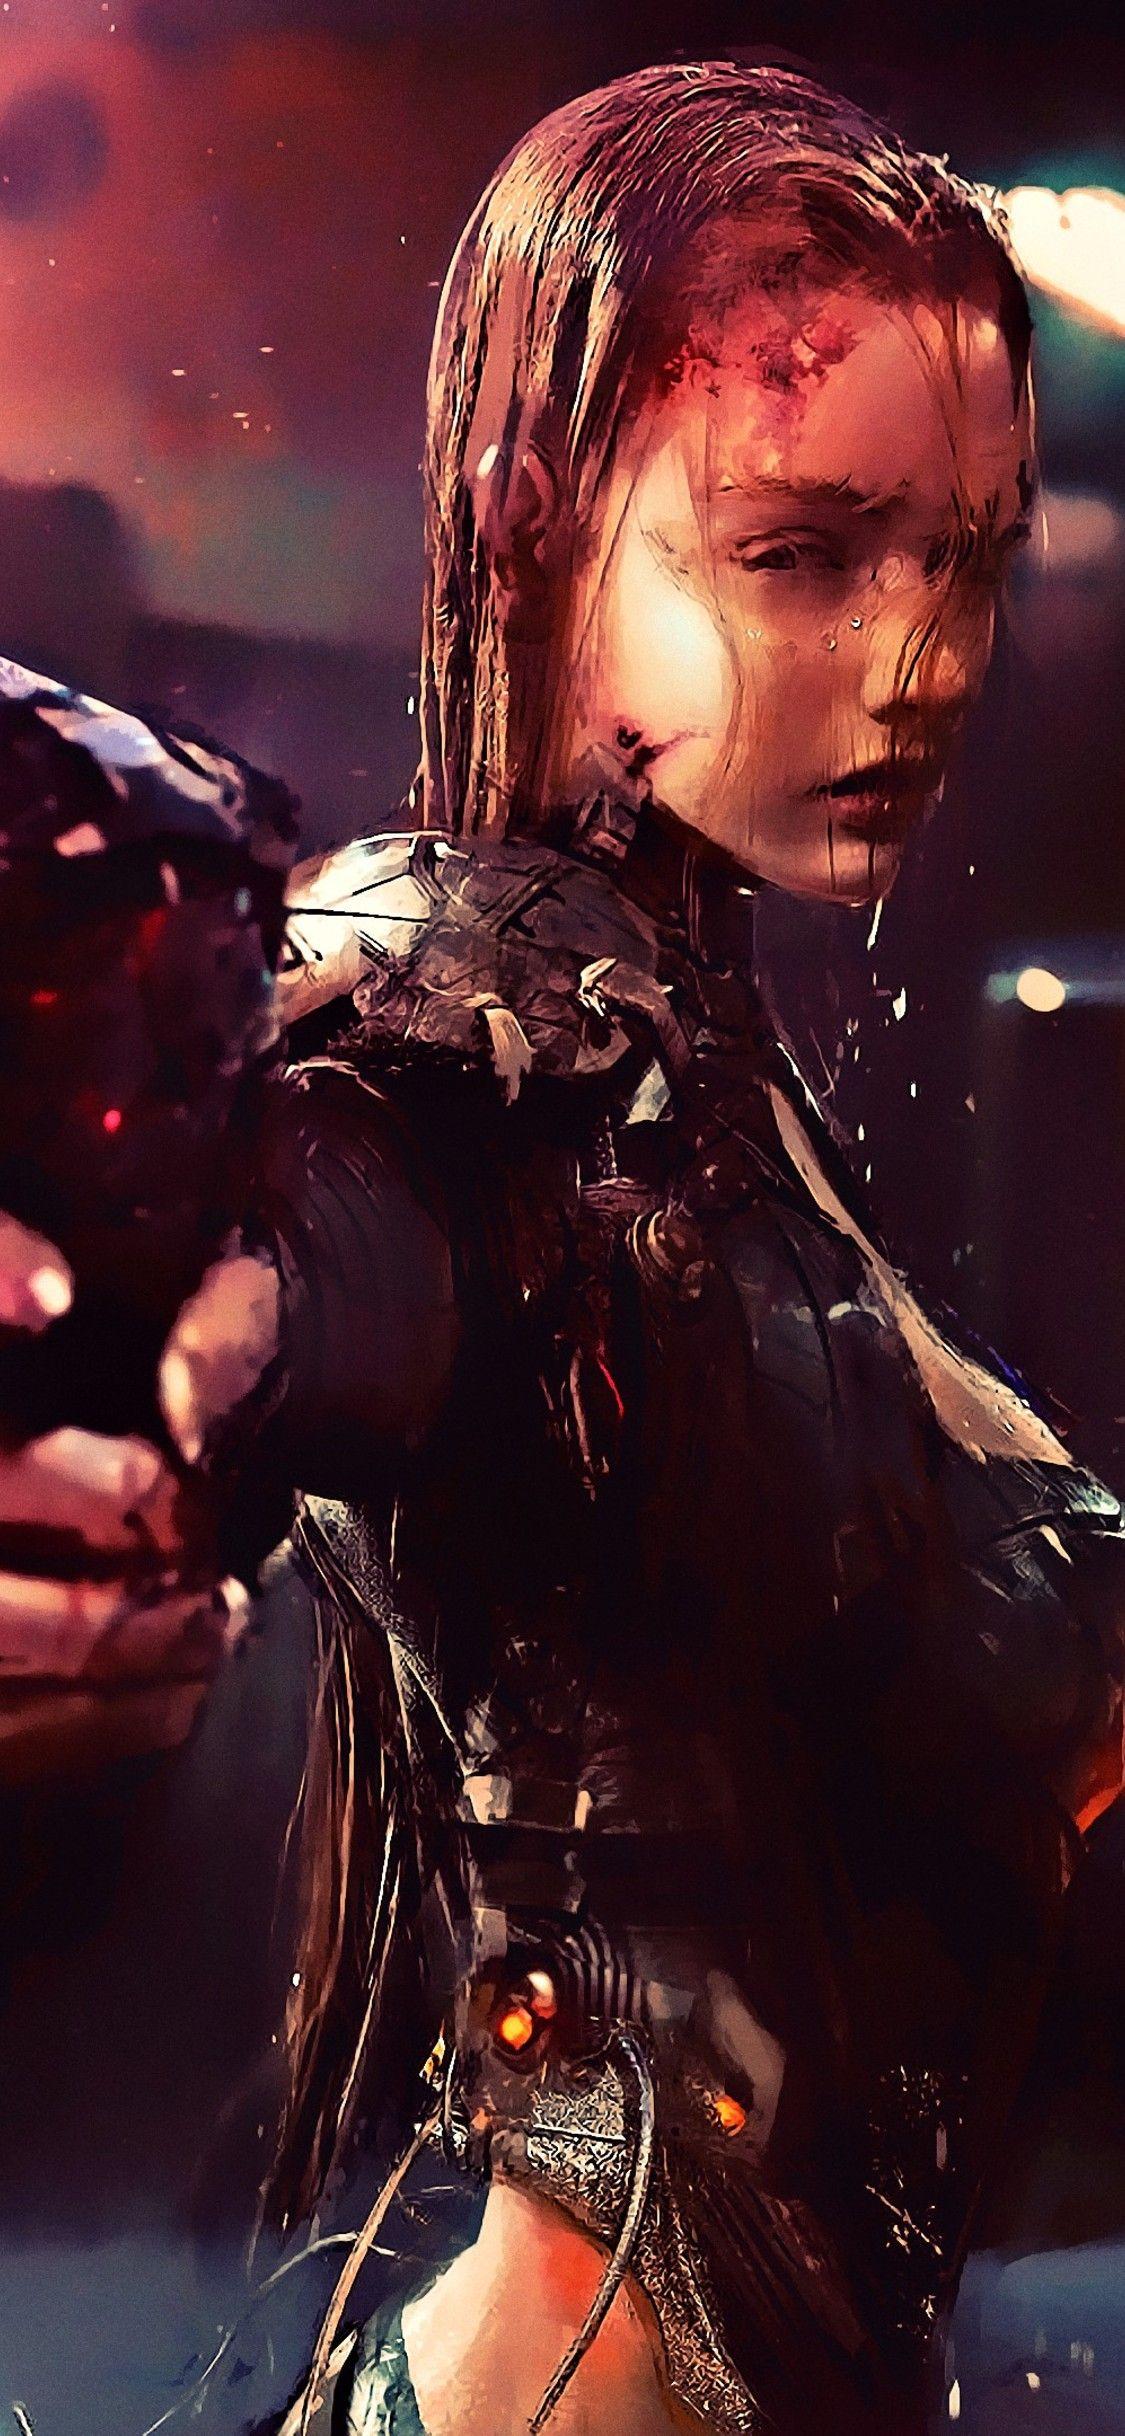 Warrior Girl Cyberpunk Futuristic Artwork iPhone X. Robotic